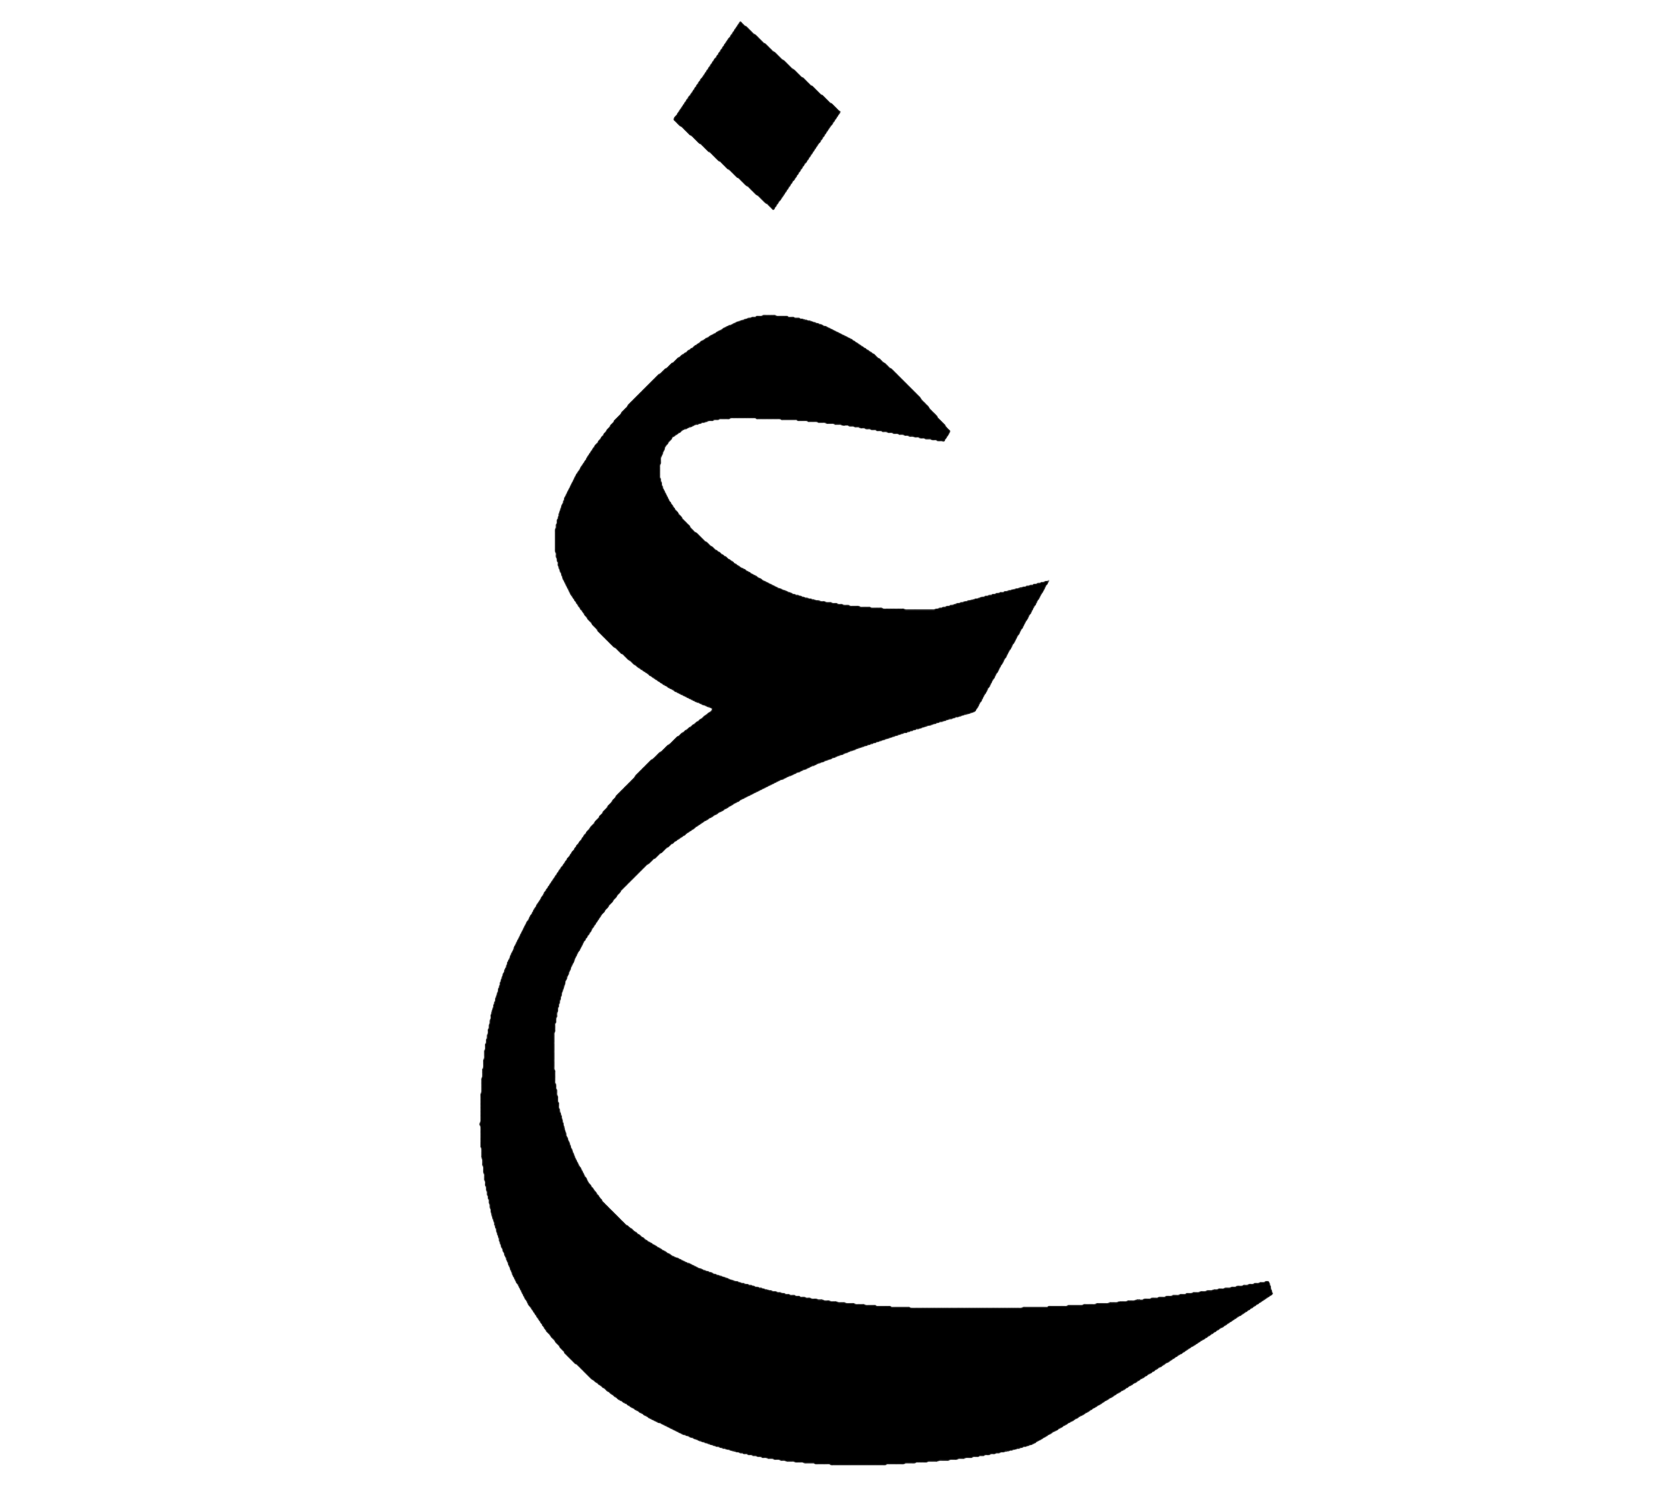 Arabic letter Ghain